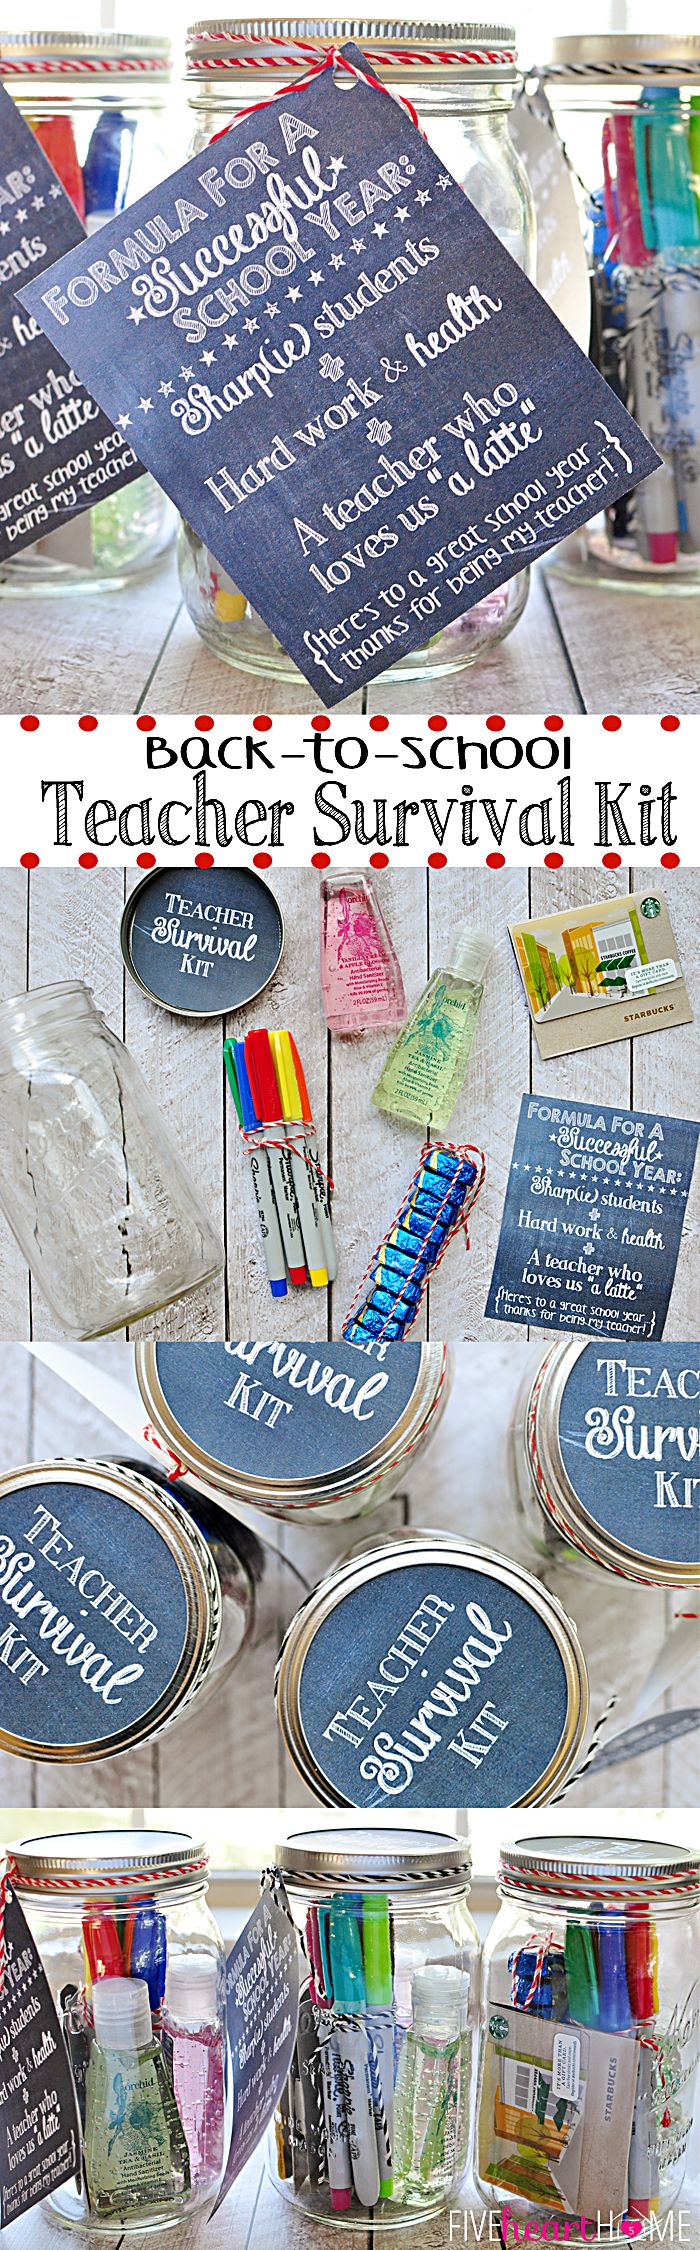 Back to School Teacher Survival Kit Free Printables ~ Mason jar teacher gift fea...